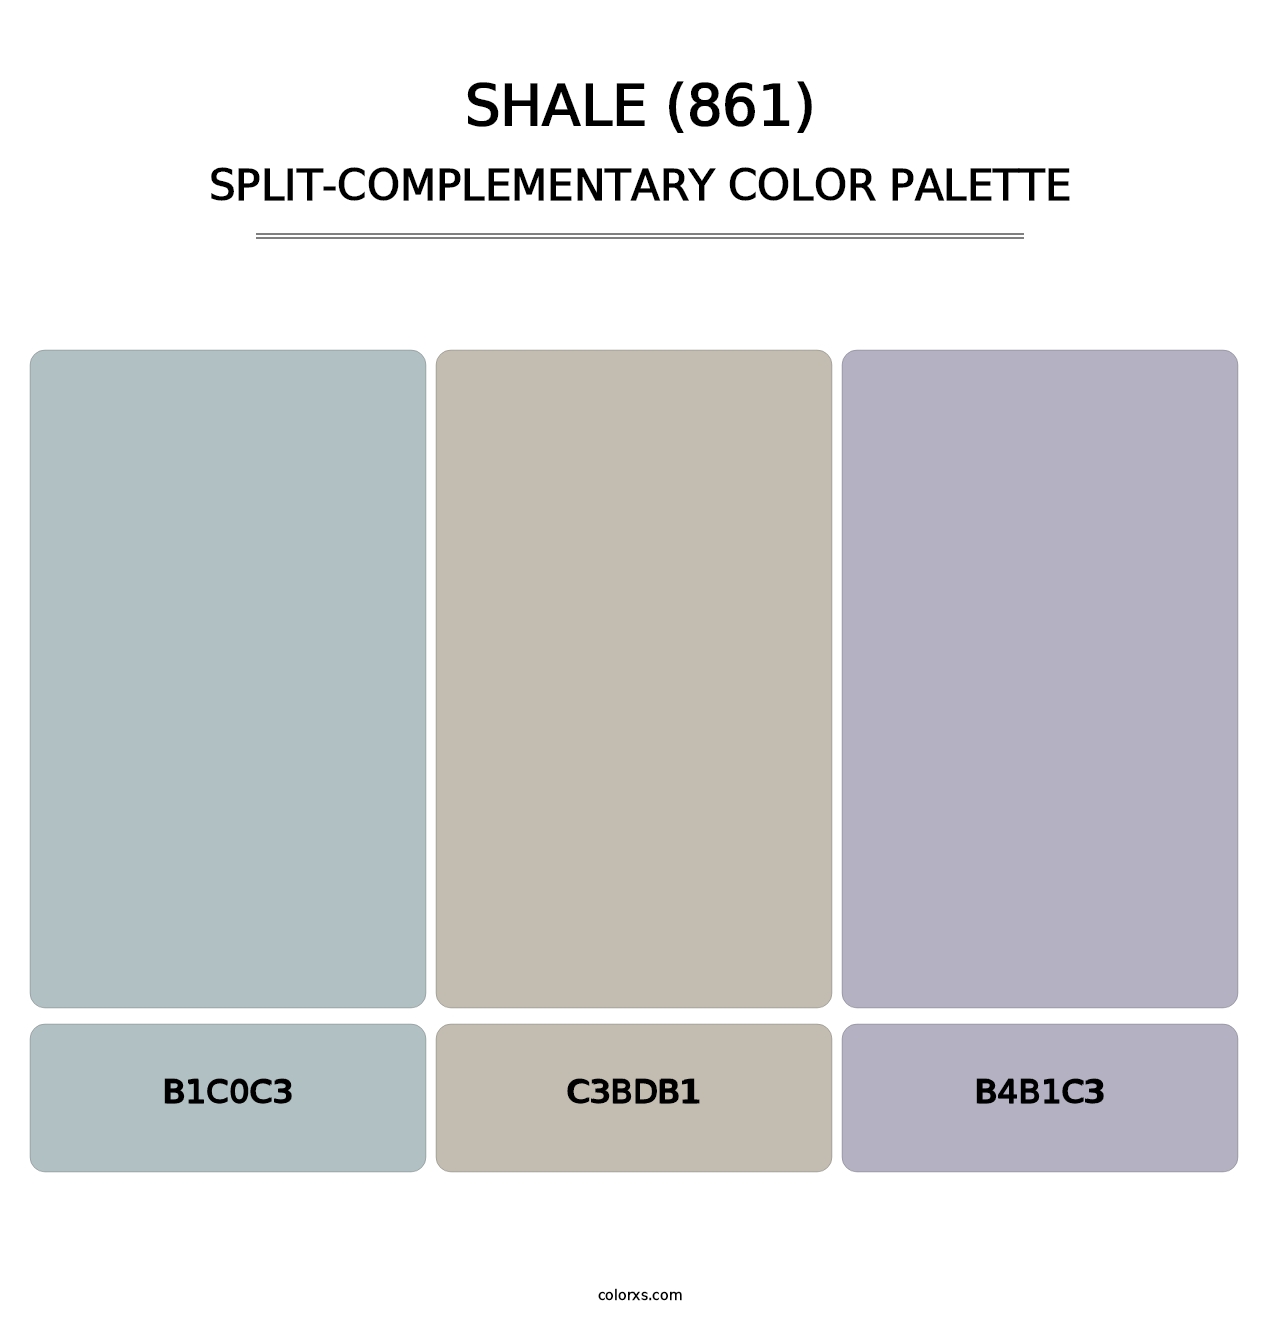 Shale (861) - Split-Complementary Color Palette